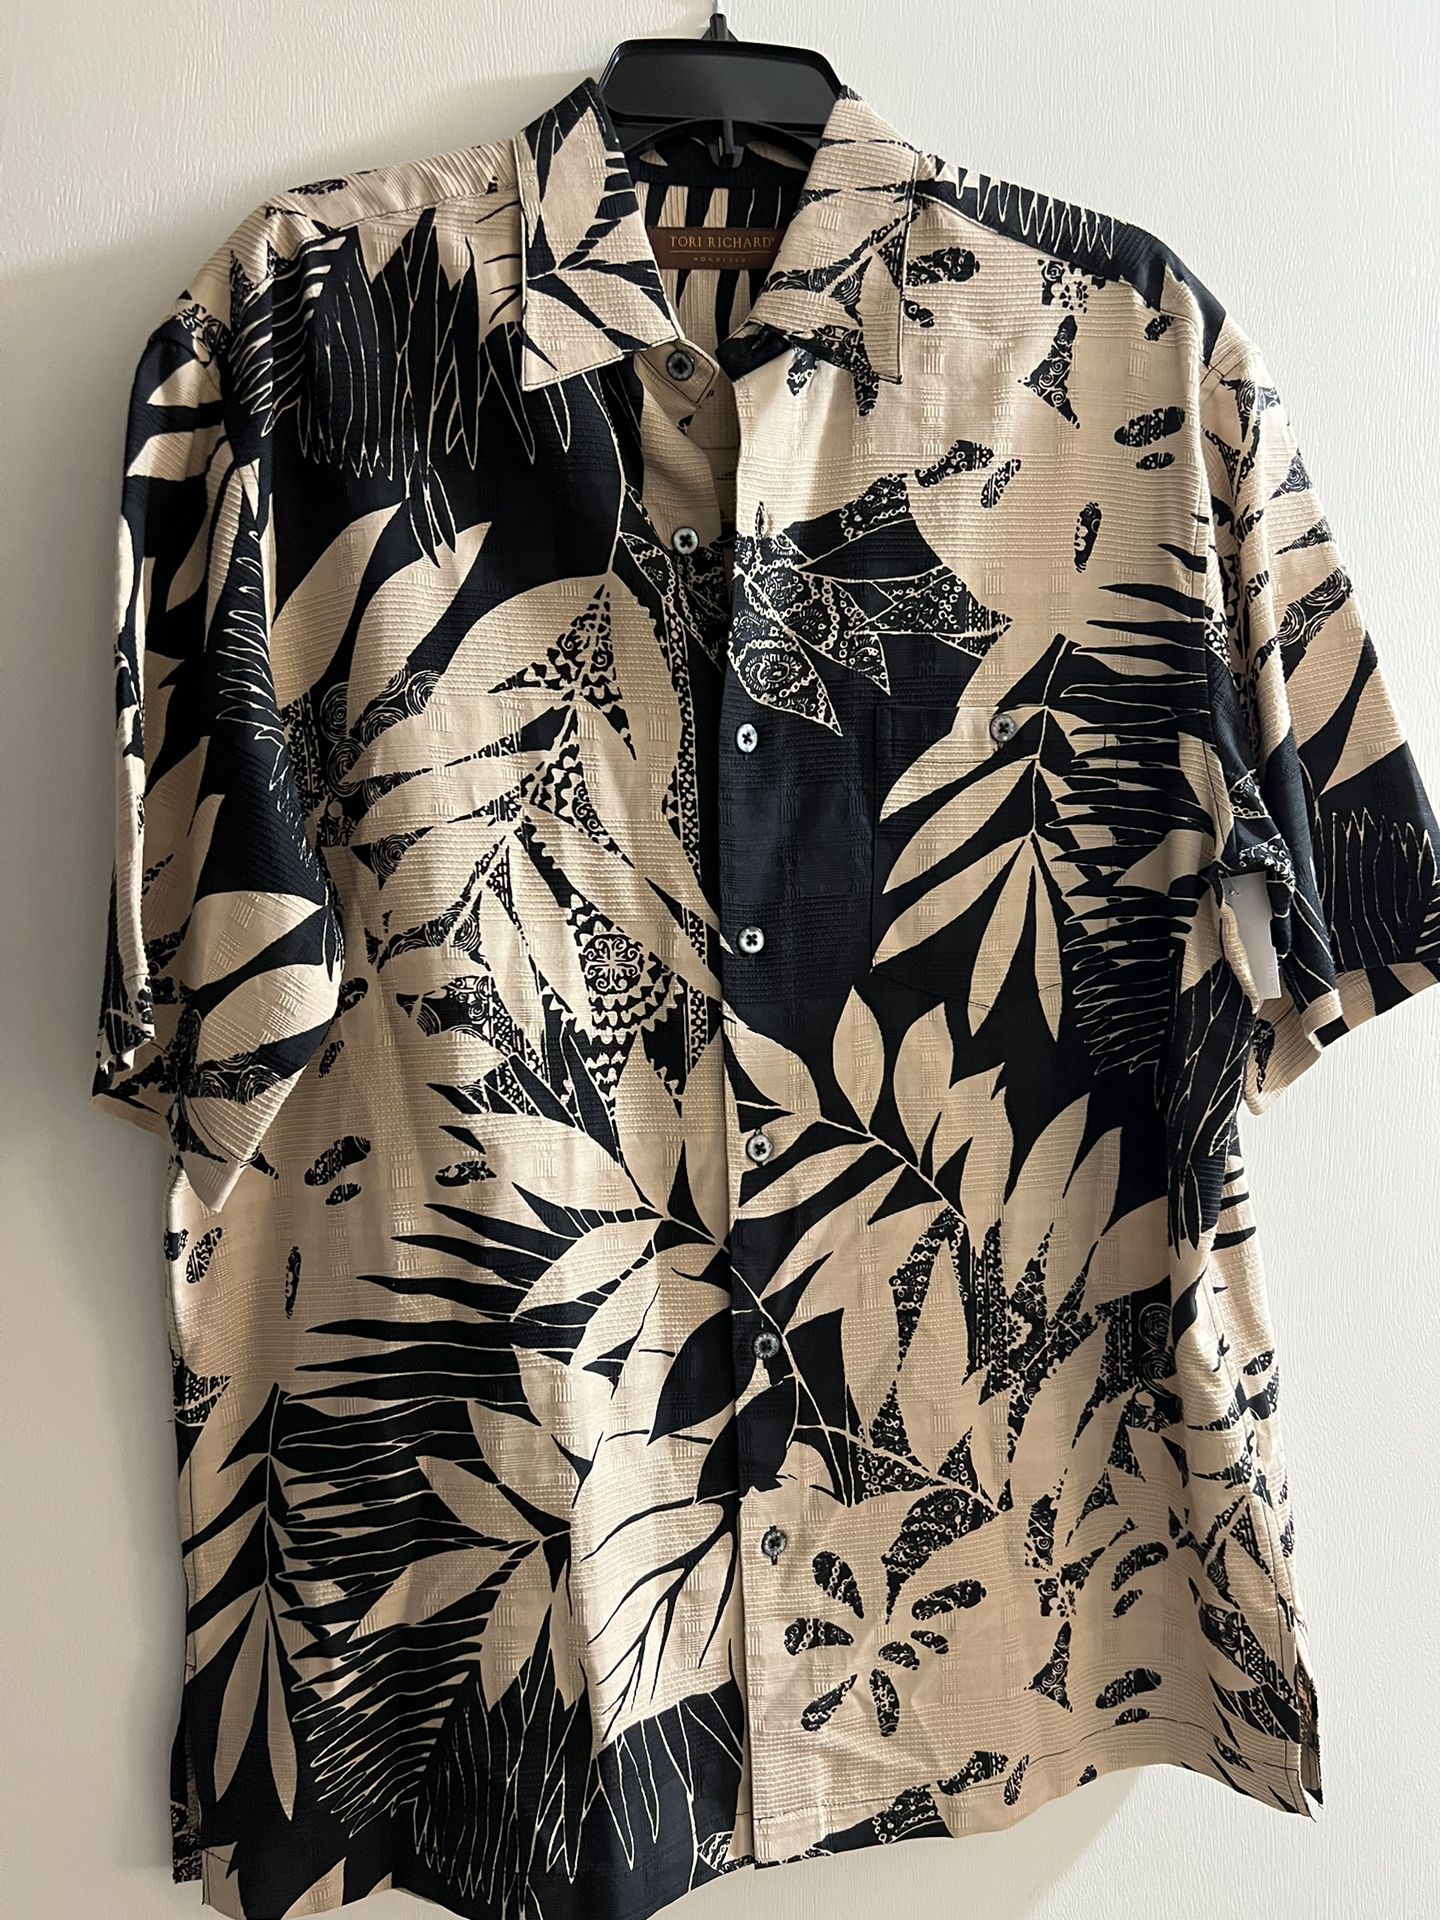 tori richard tropic ss Hawaii theme shirt size Med New with tags